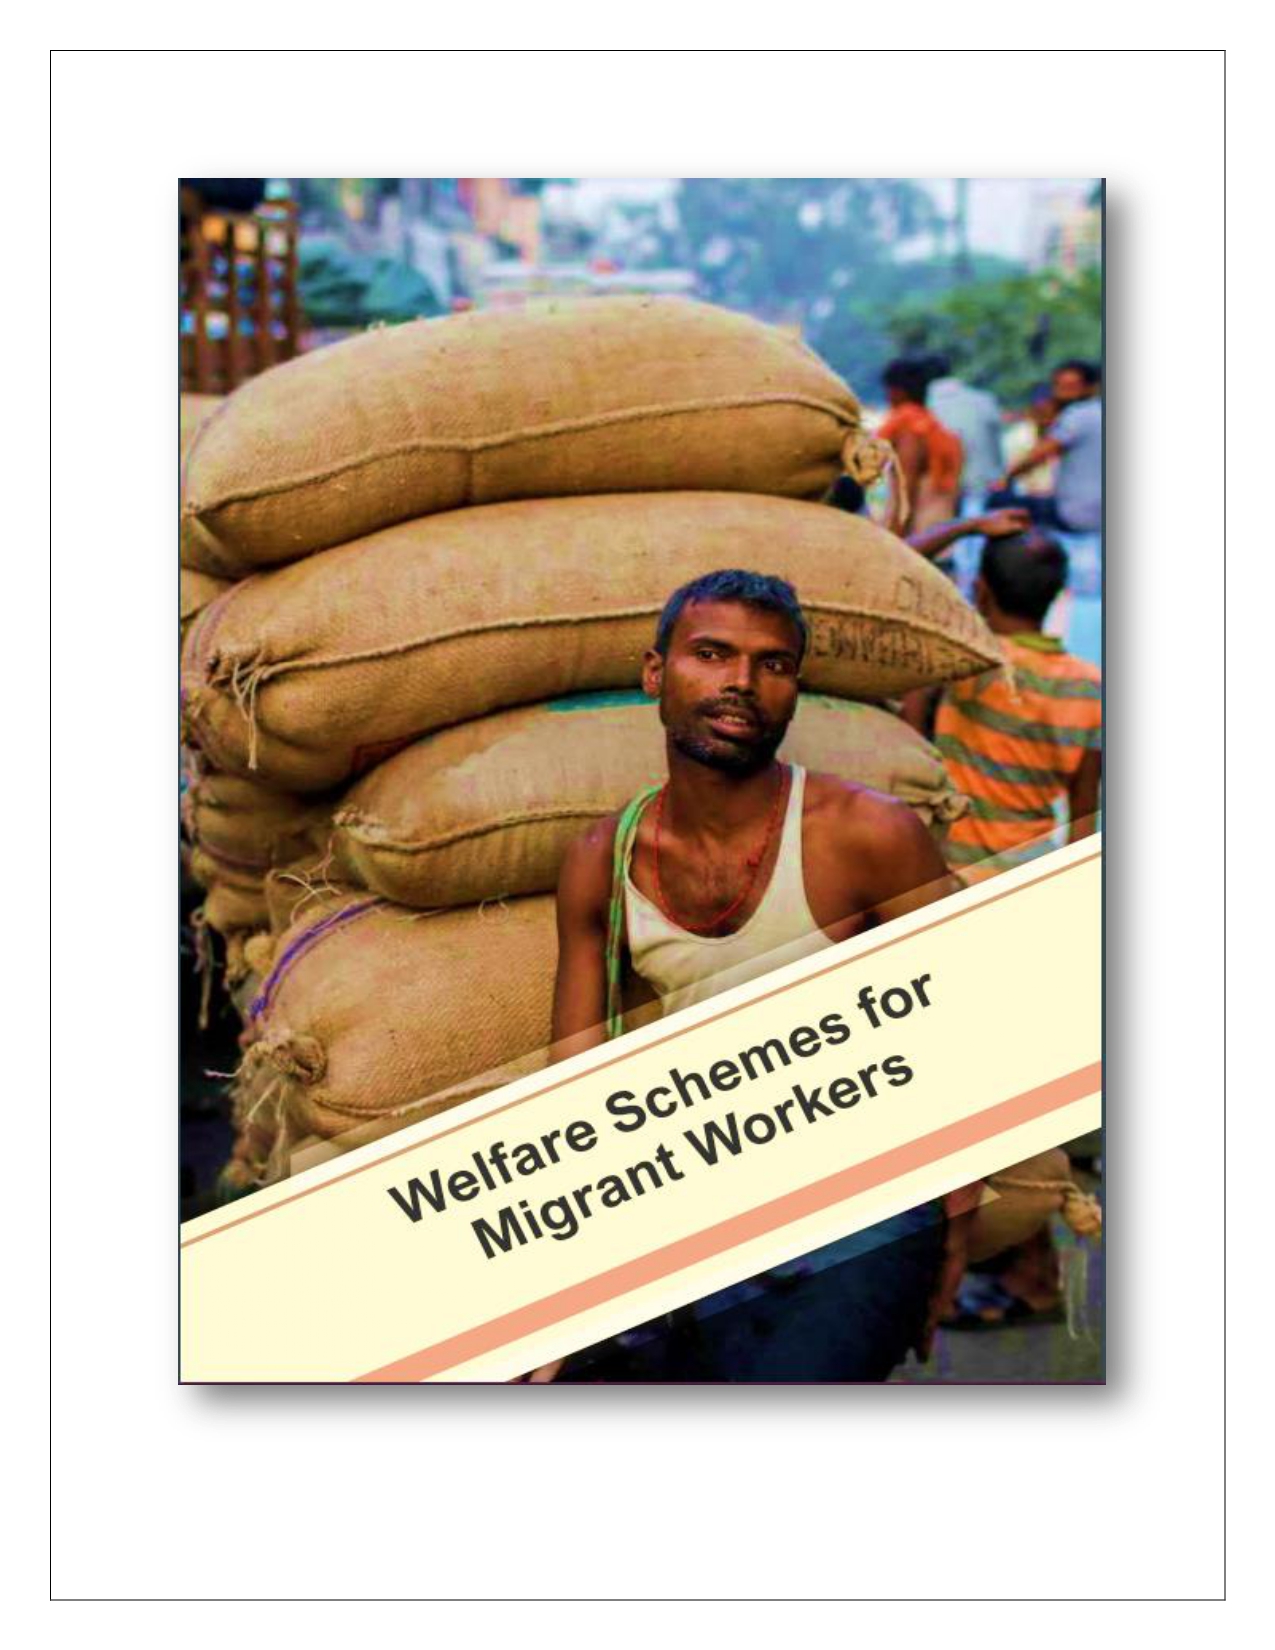 Welfare Scheme for Migrant Workers